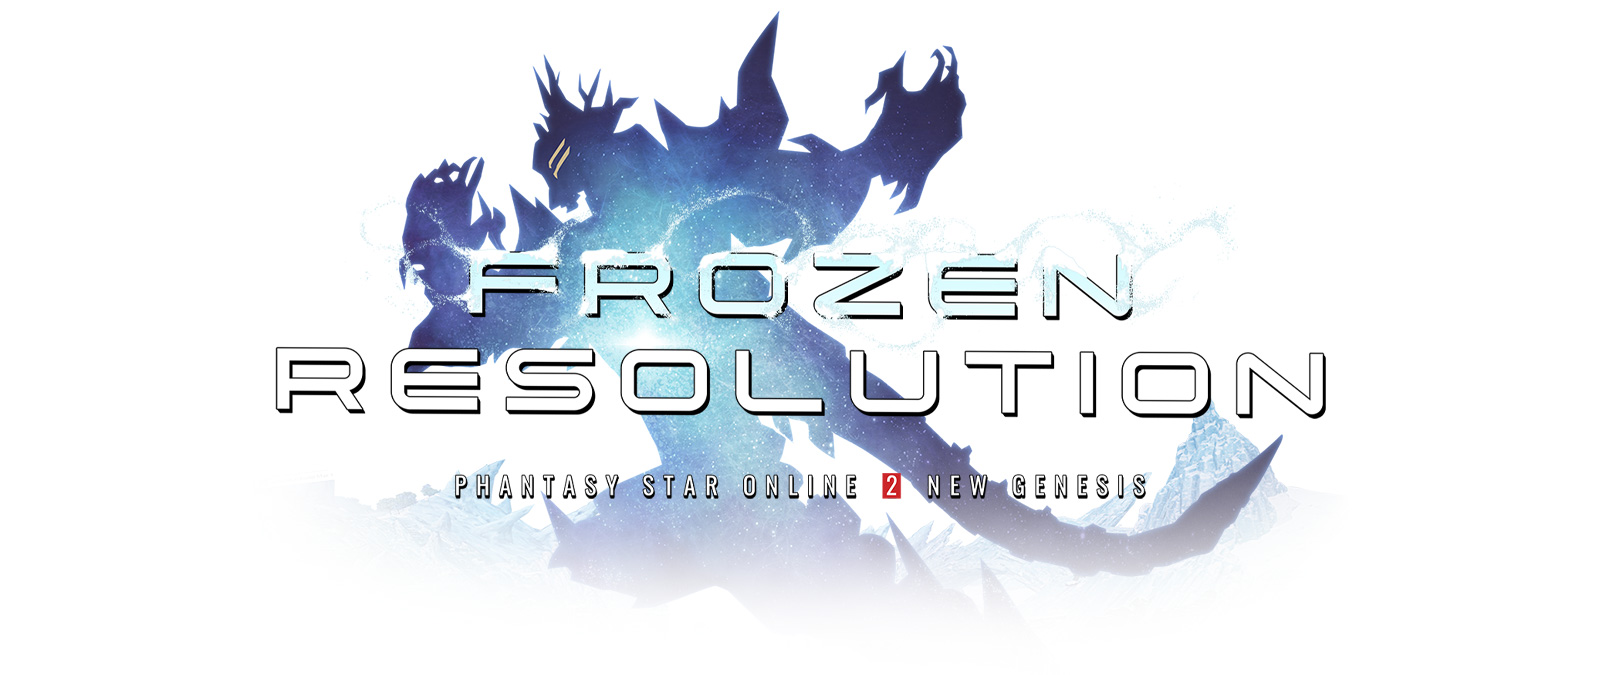 Frozen Resolution, Phantasy Star Online 2 New Genesis, силуэт бронекостюма покрыт инеем.